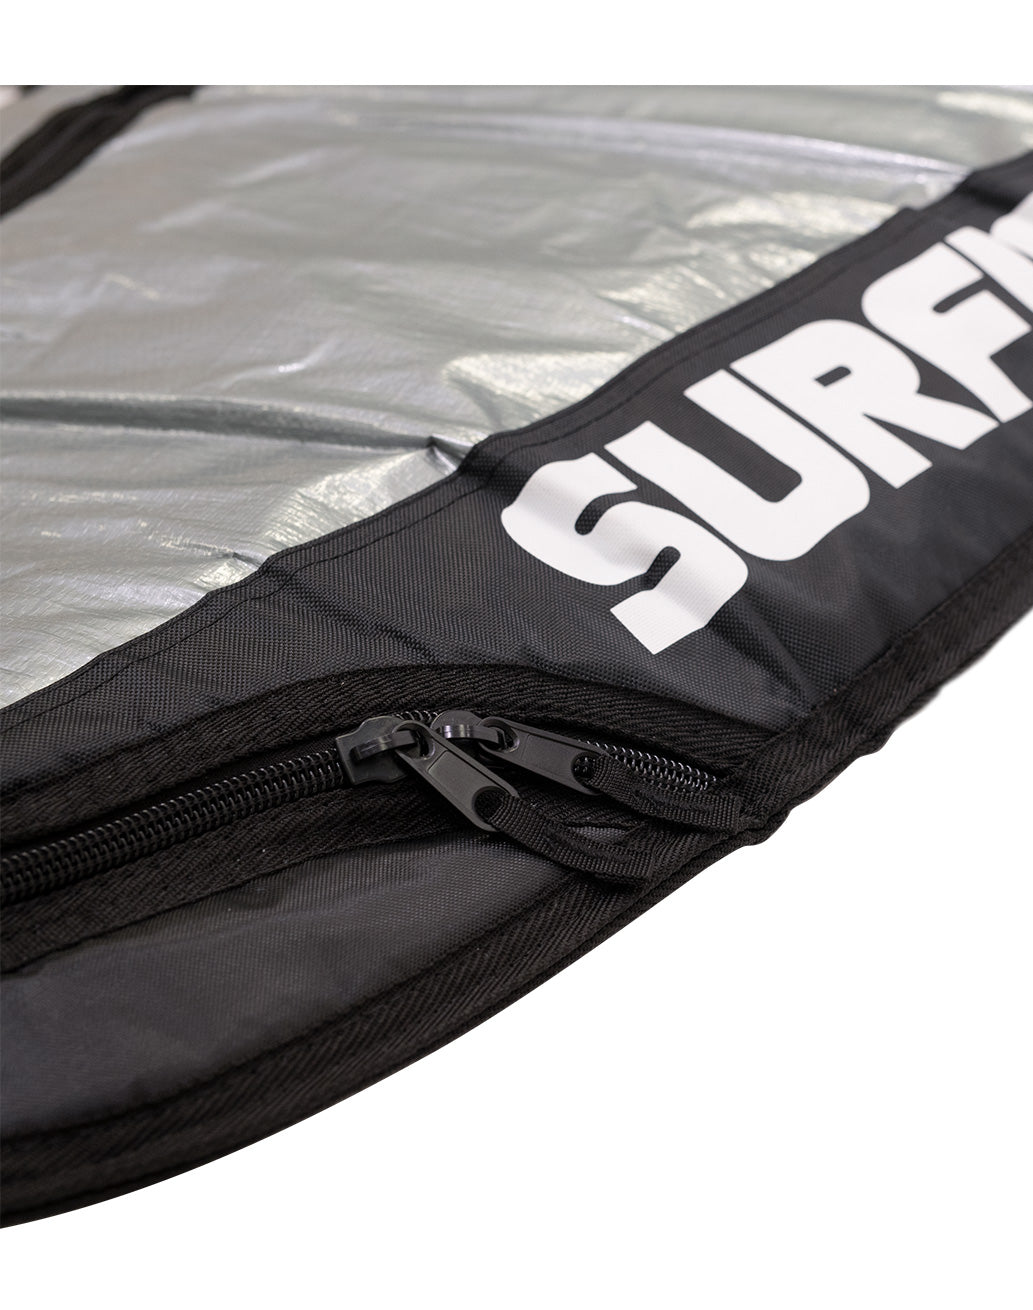 Surfica Surfboard Bags